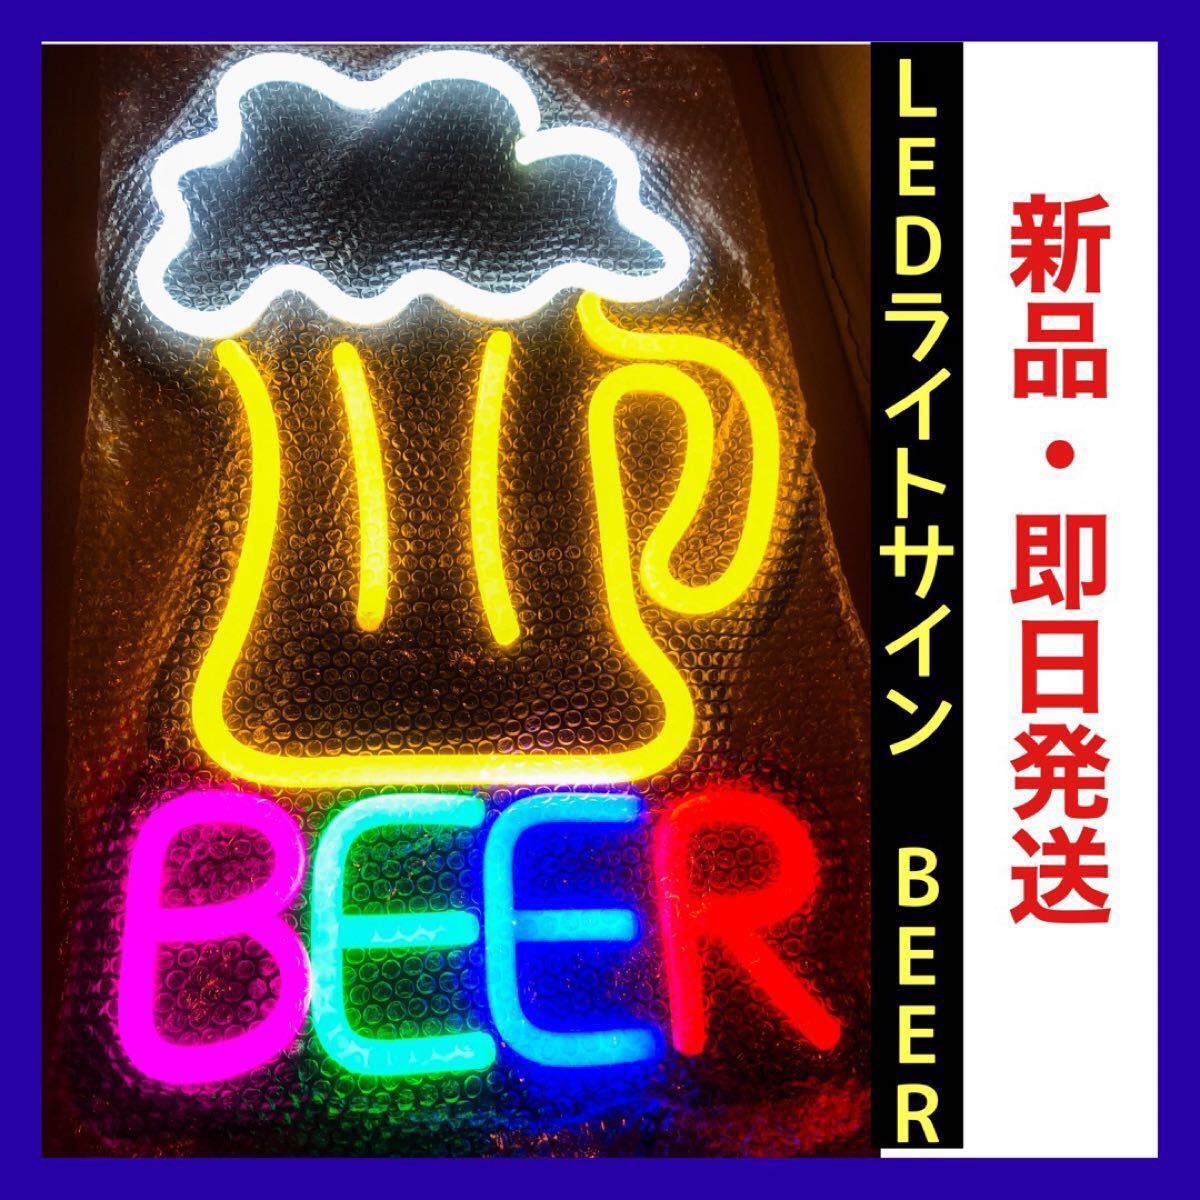 LED ライトサイン 【BEER】 ネオン ビール イルミネーション インテリア Bar cafe beer アメリカン 雑貨